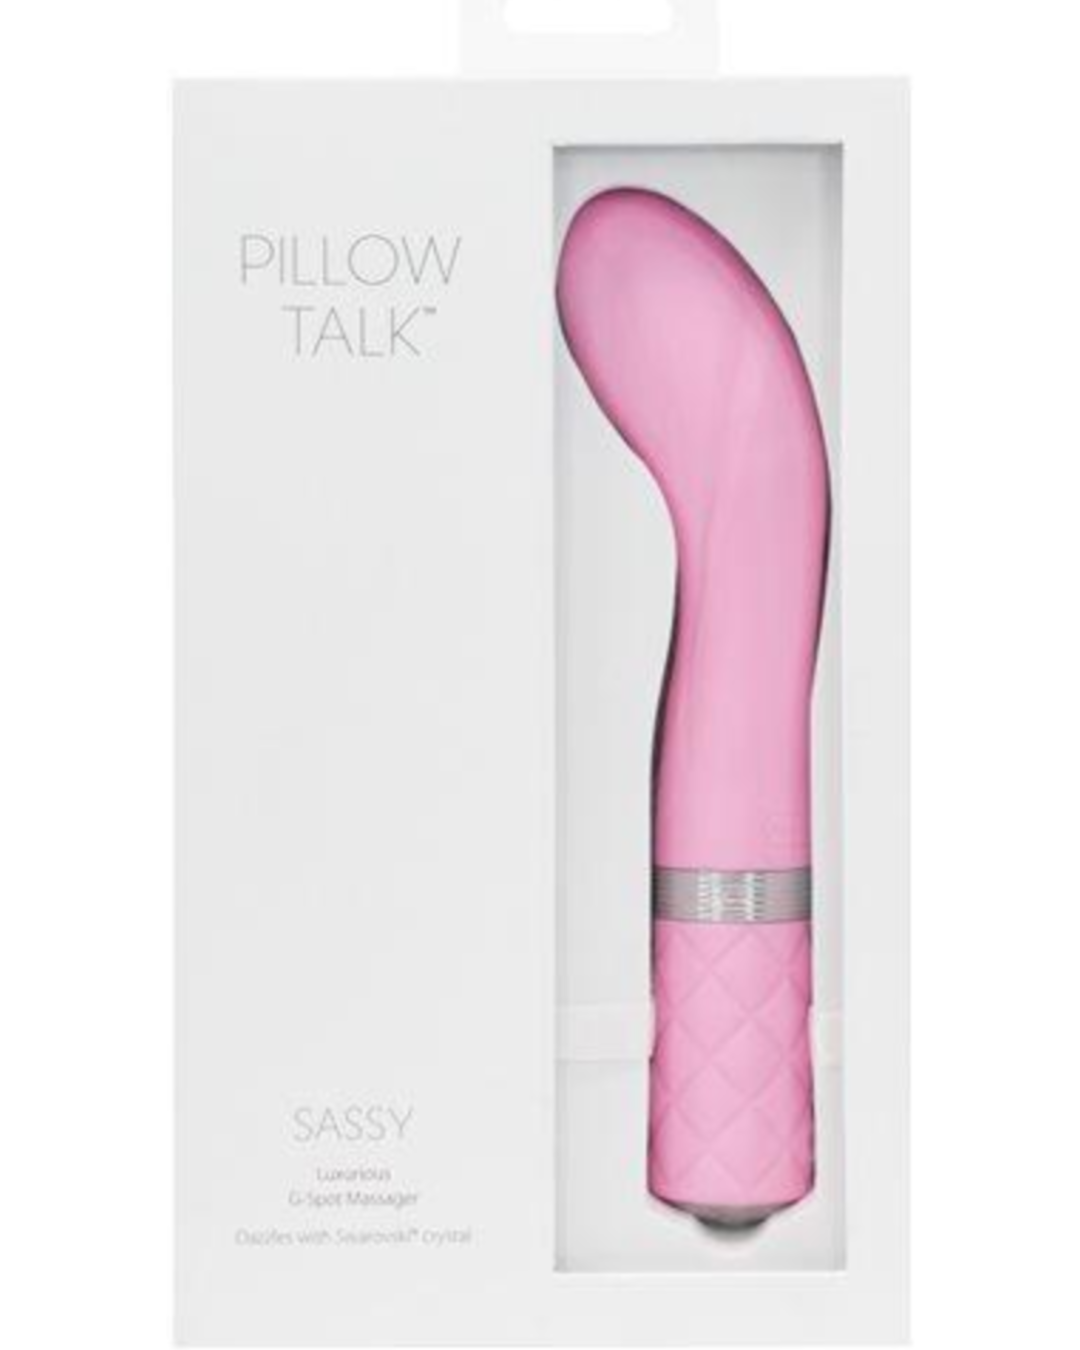 Pillow Talk Sassy G-spot Vibrator by BMS - Pink box